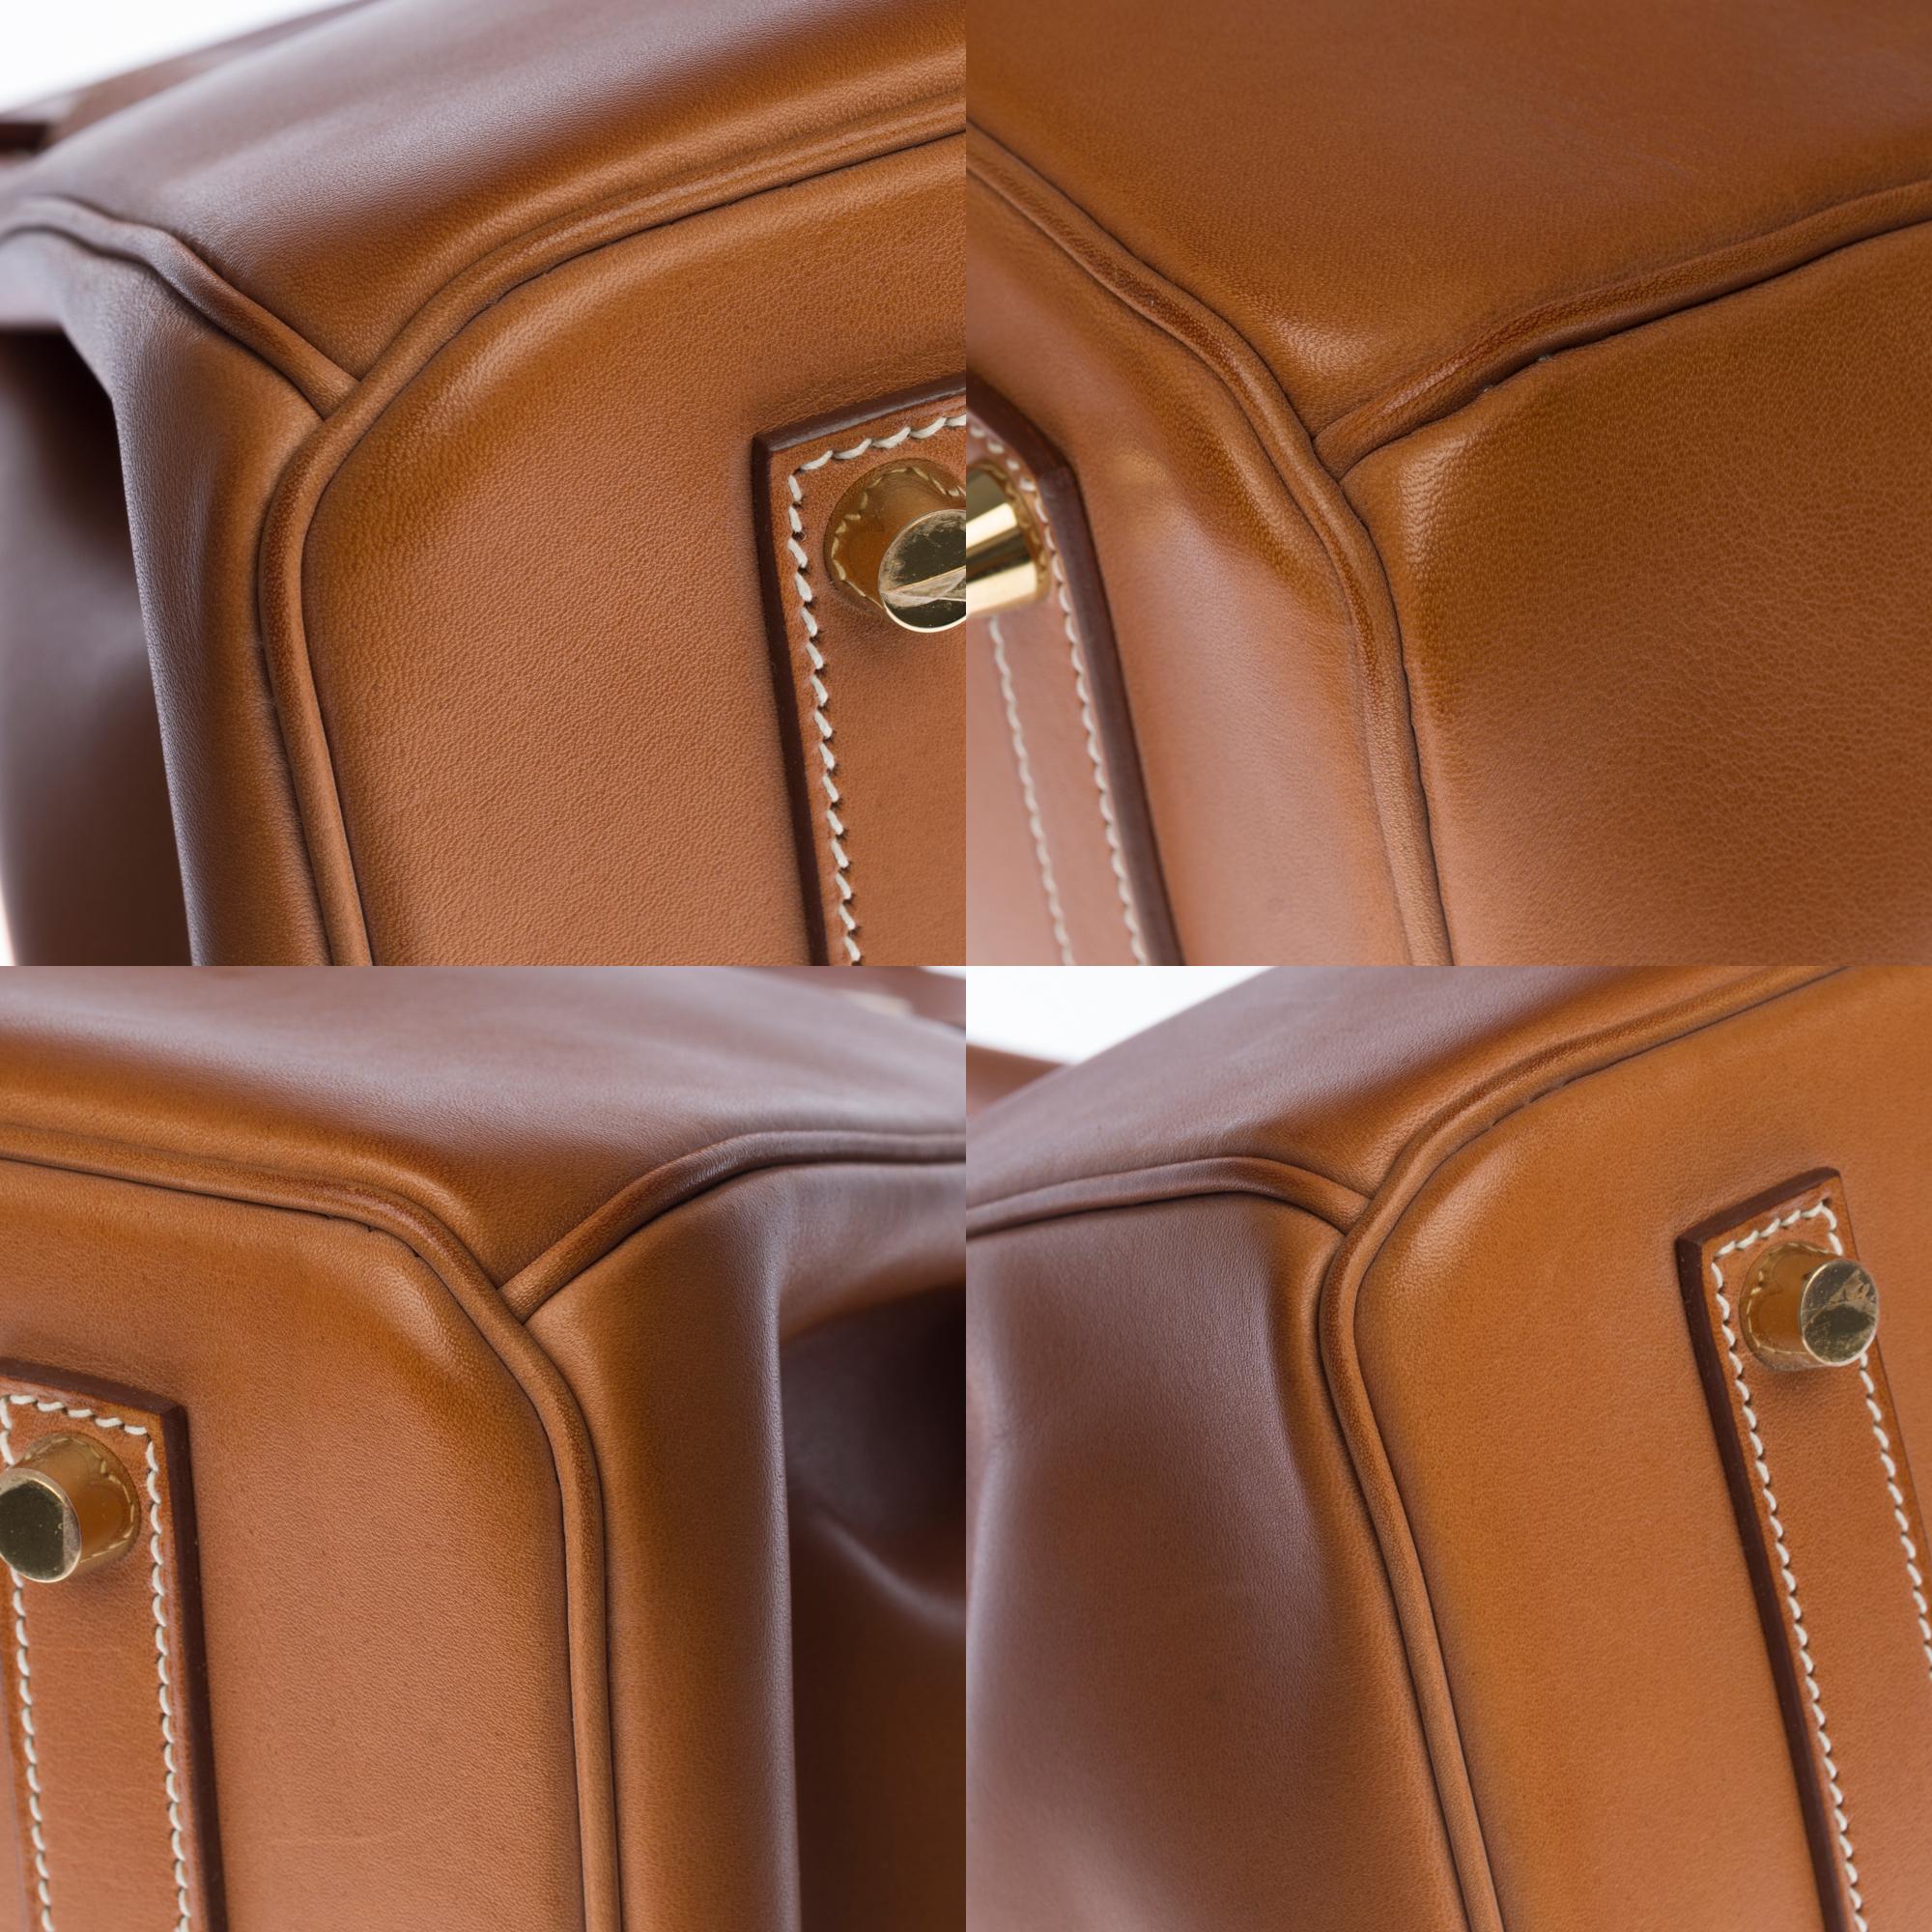 NEW - ULTRA RARE- Hermès Birkin 35 handbag in Gold Barenia leather, GHW 5